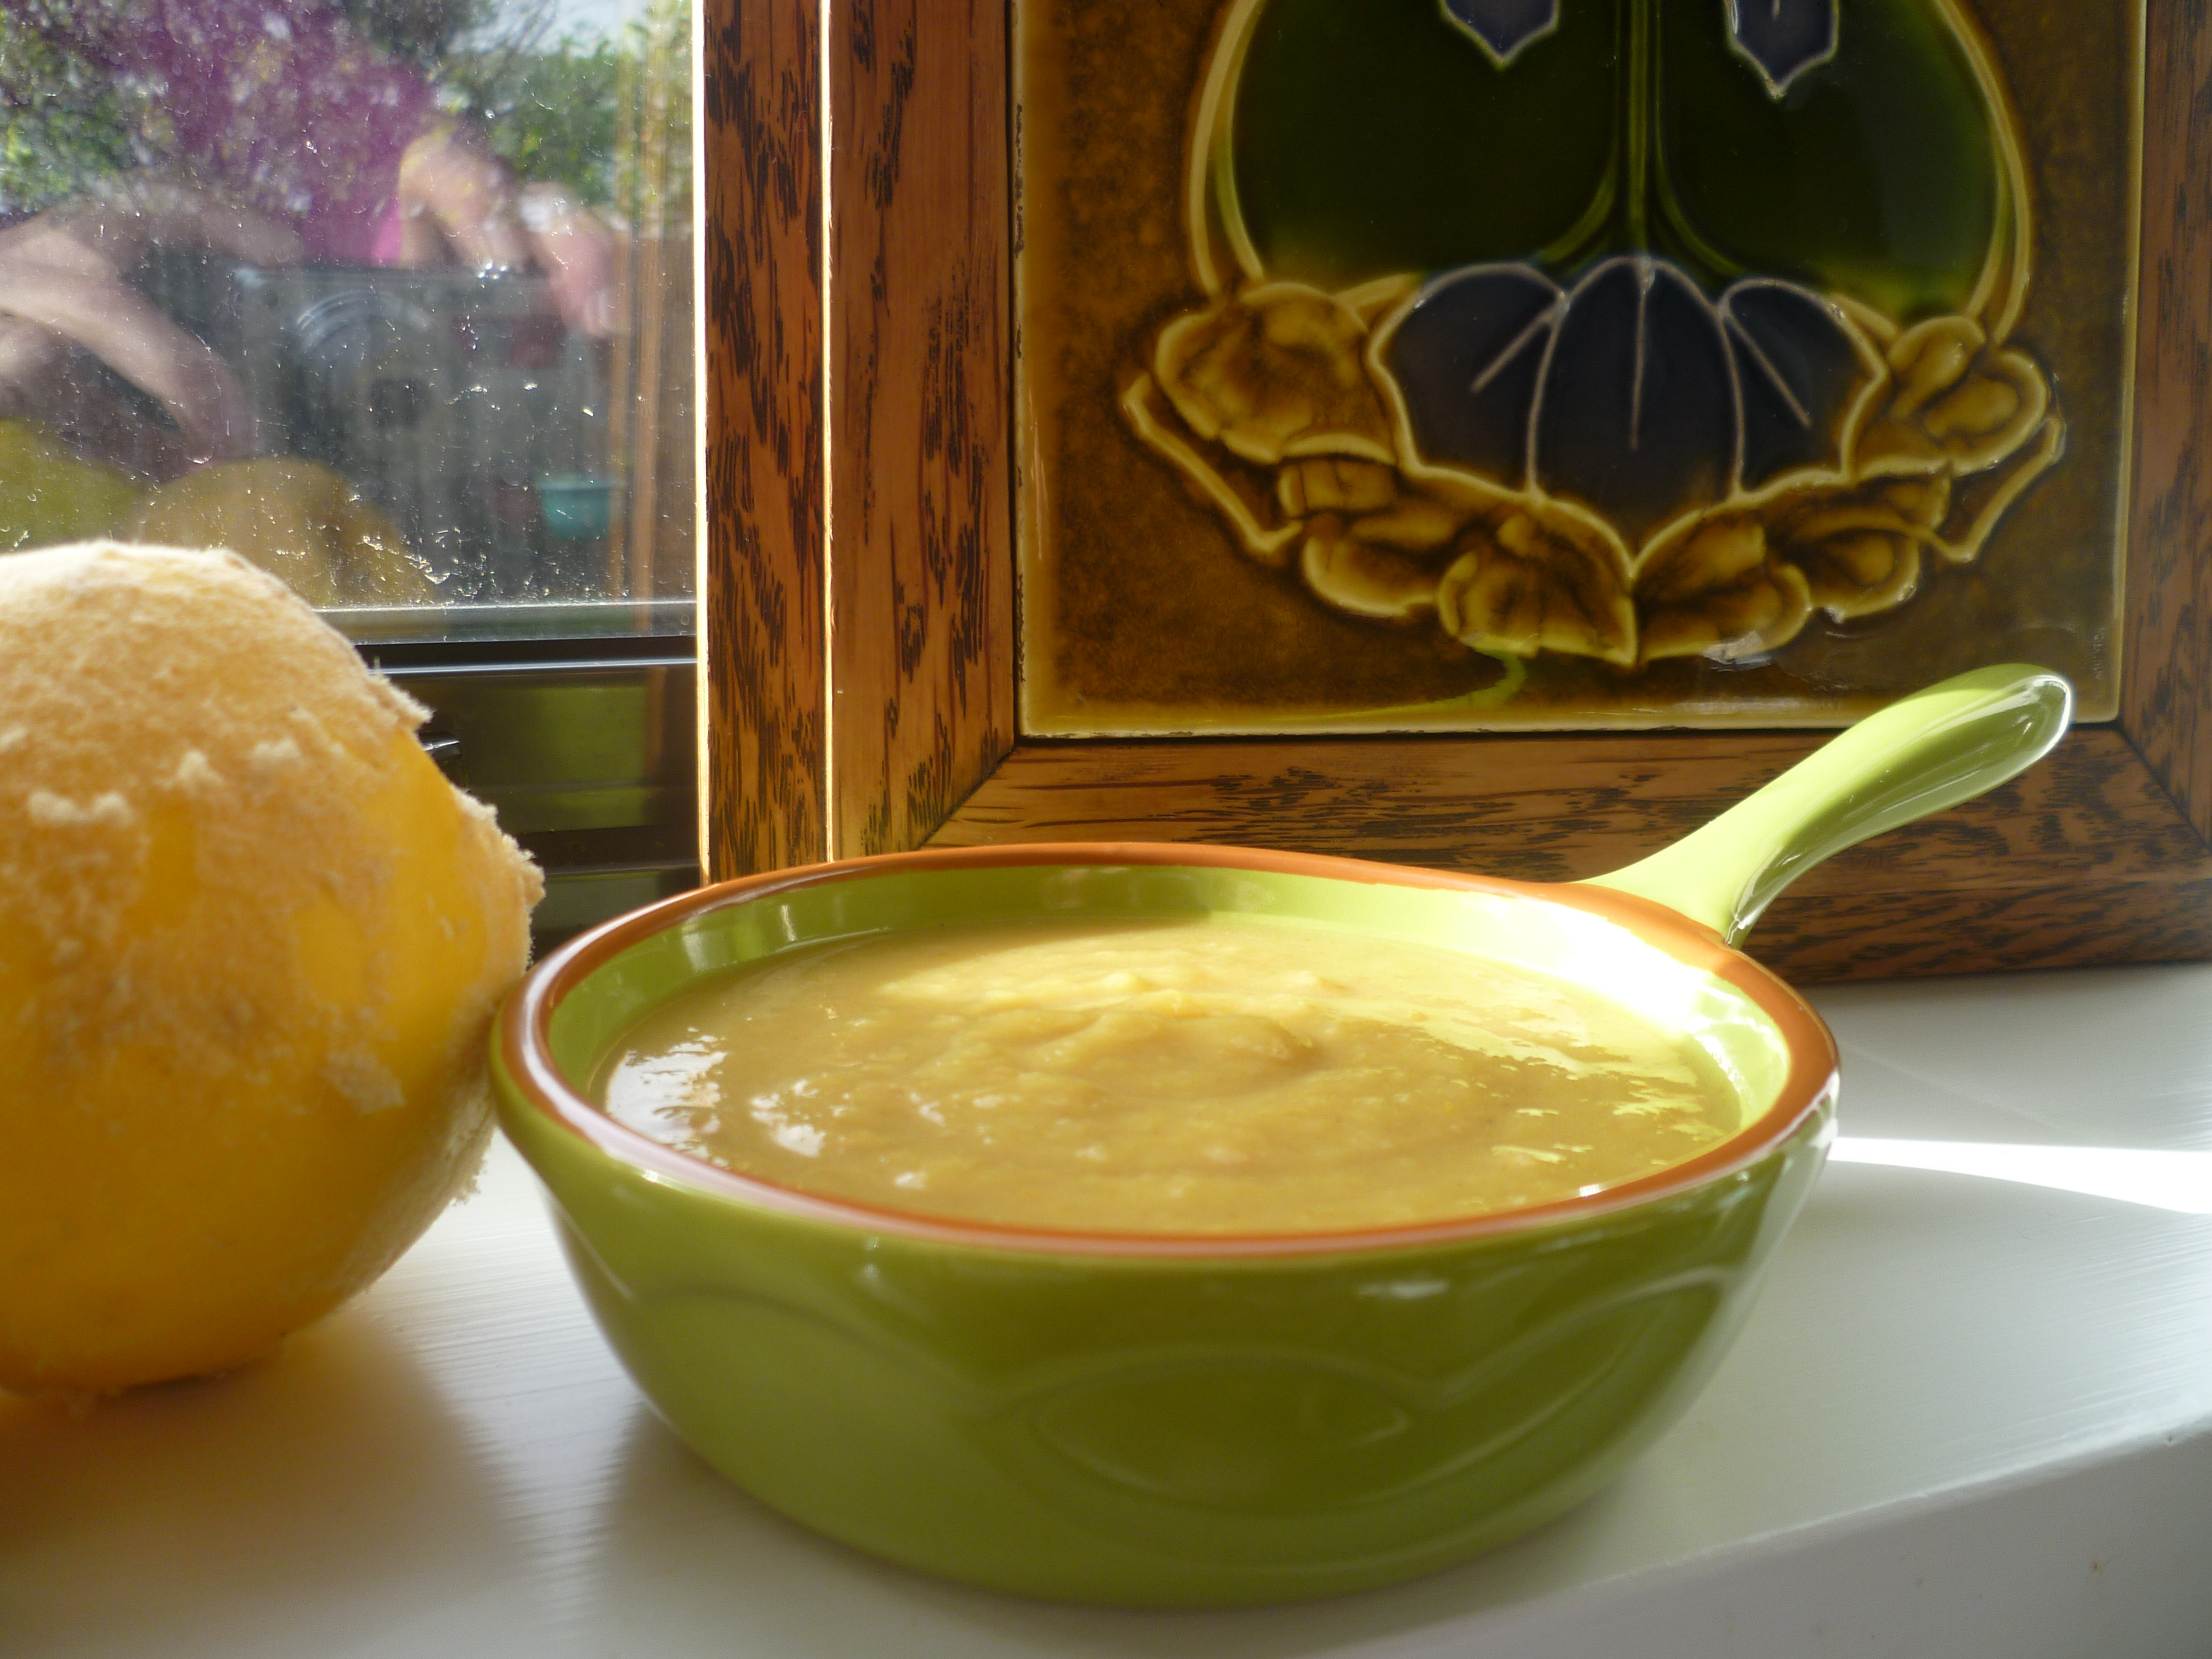 A little sunshine dips into the pumpkin soup.